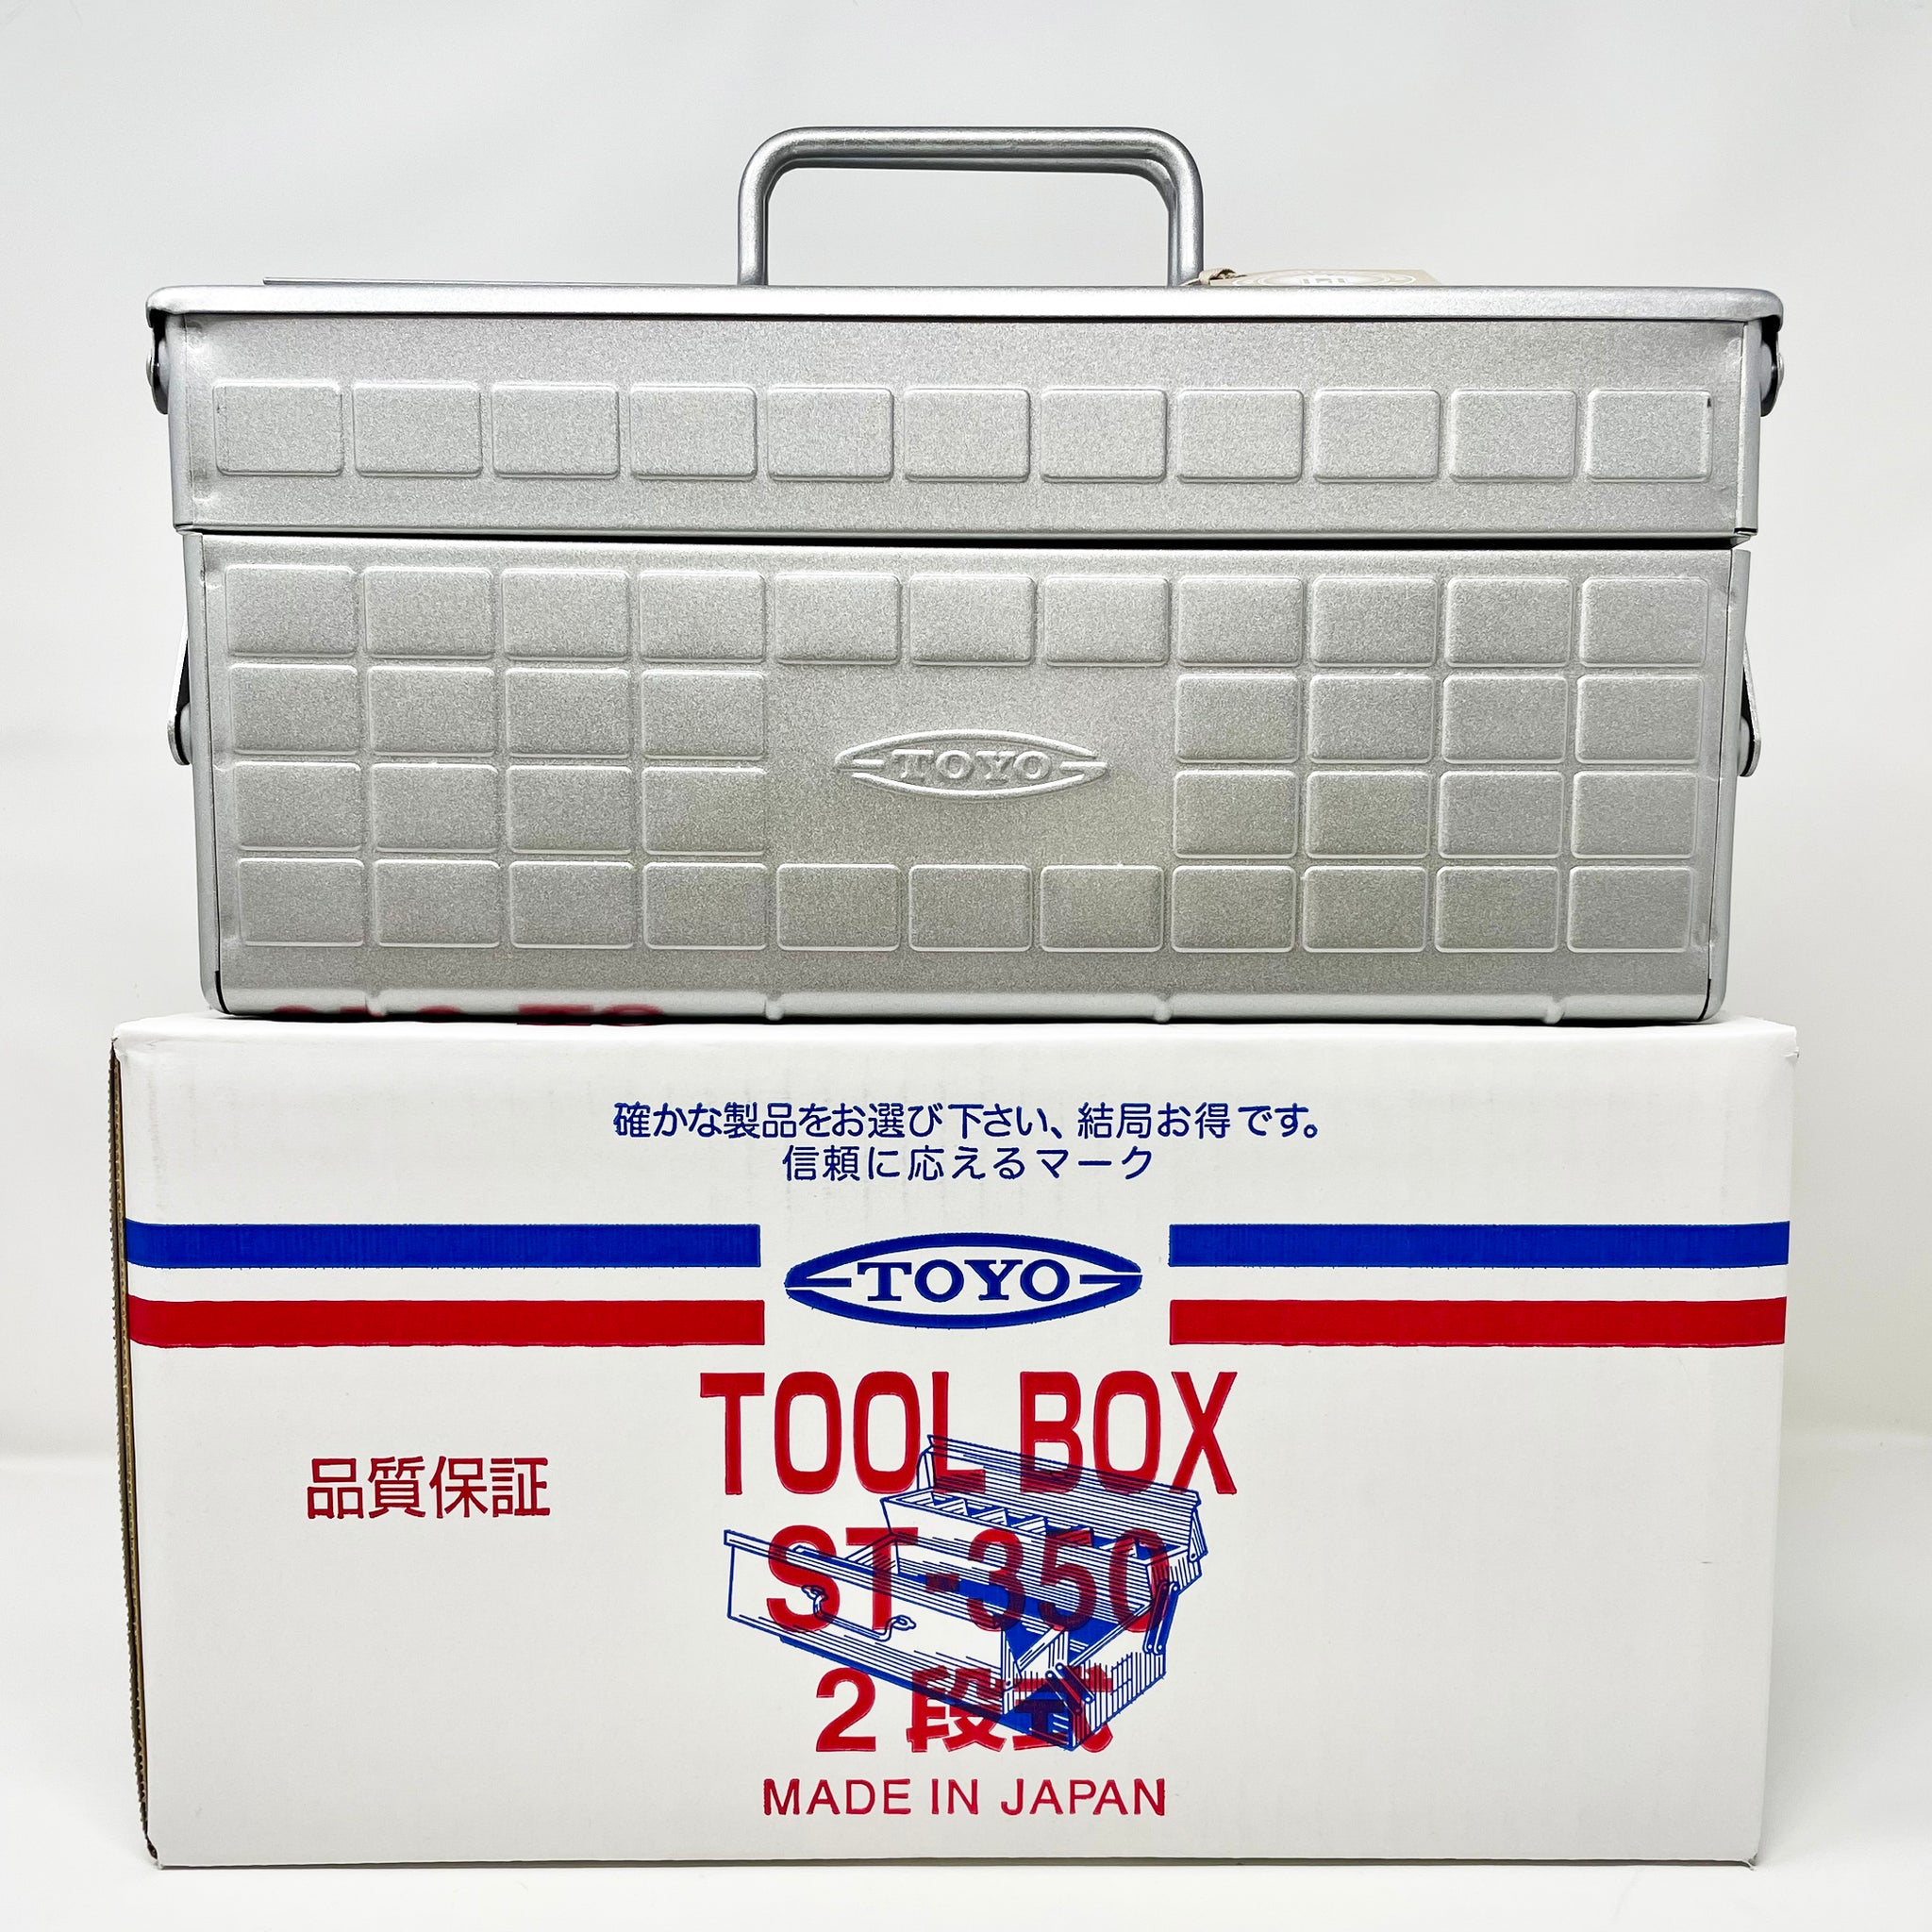 Toyo Large Tool Box – North Bennet Street School